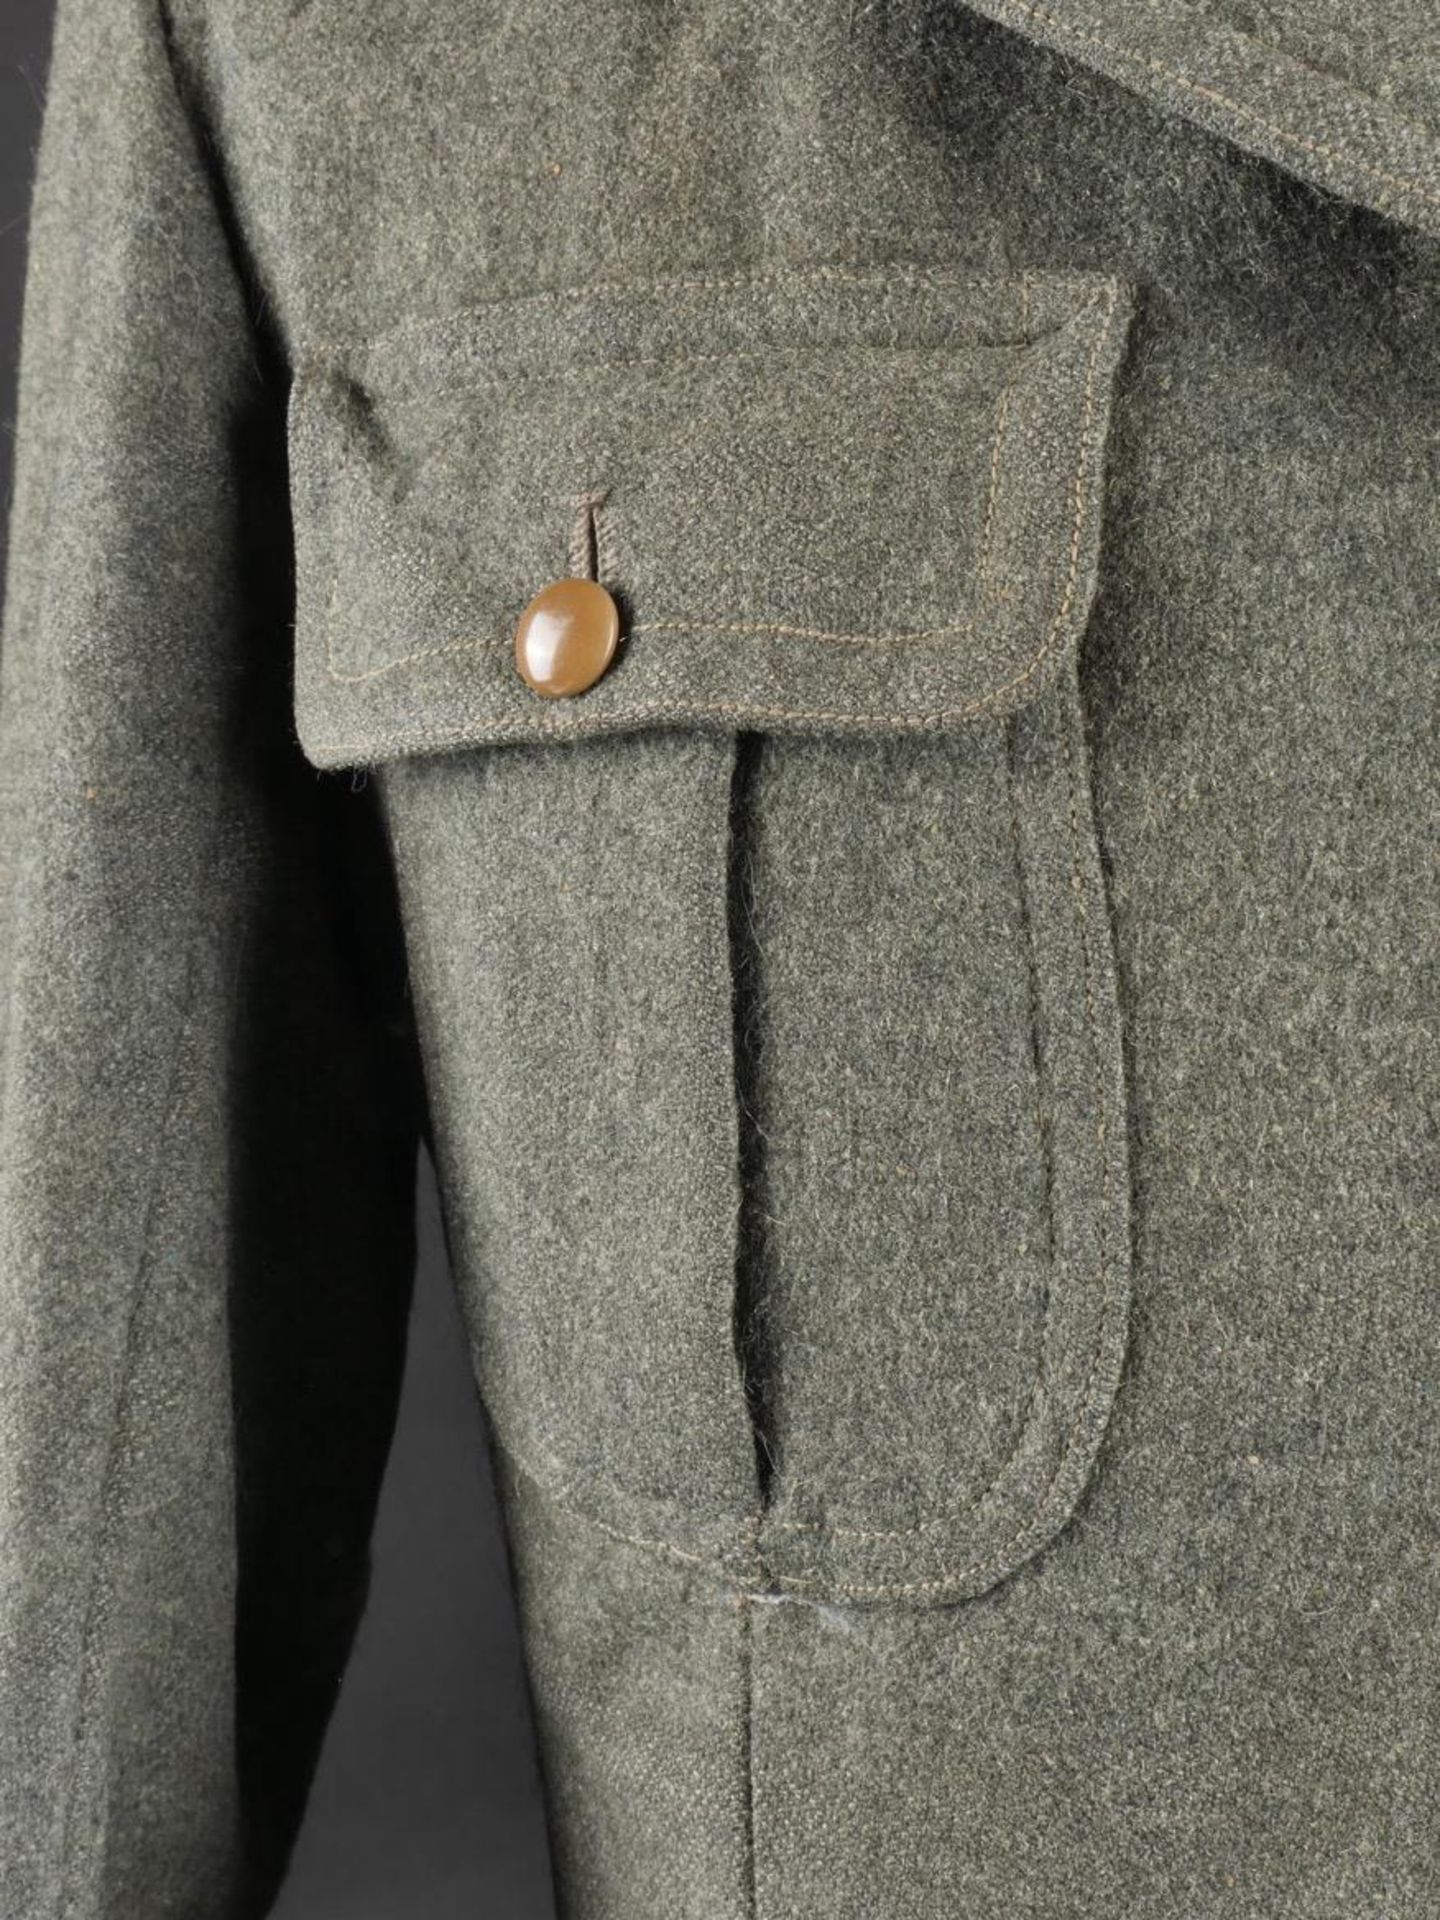 Vareuse de Lieutenant de la division Messina. Messina Division Lieutenant s jacket. - Image 2 of 19